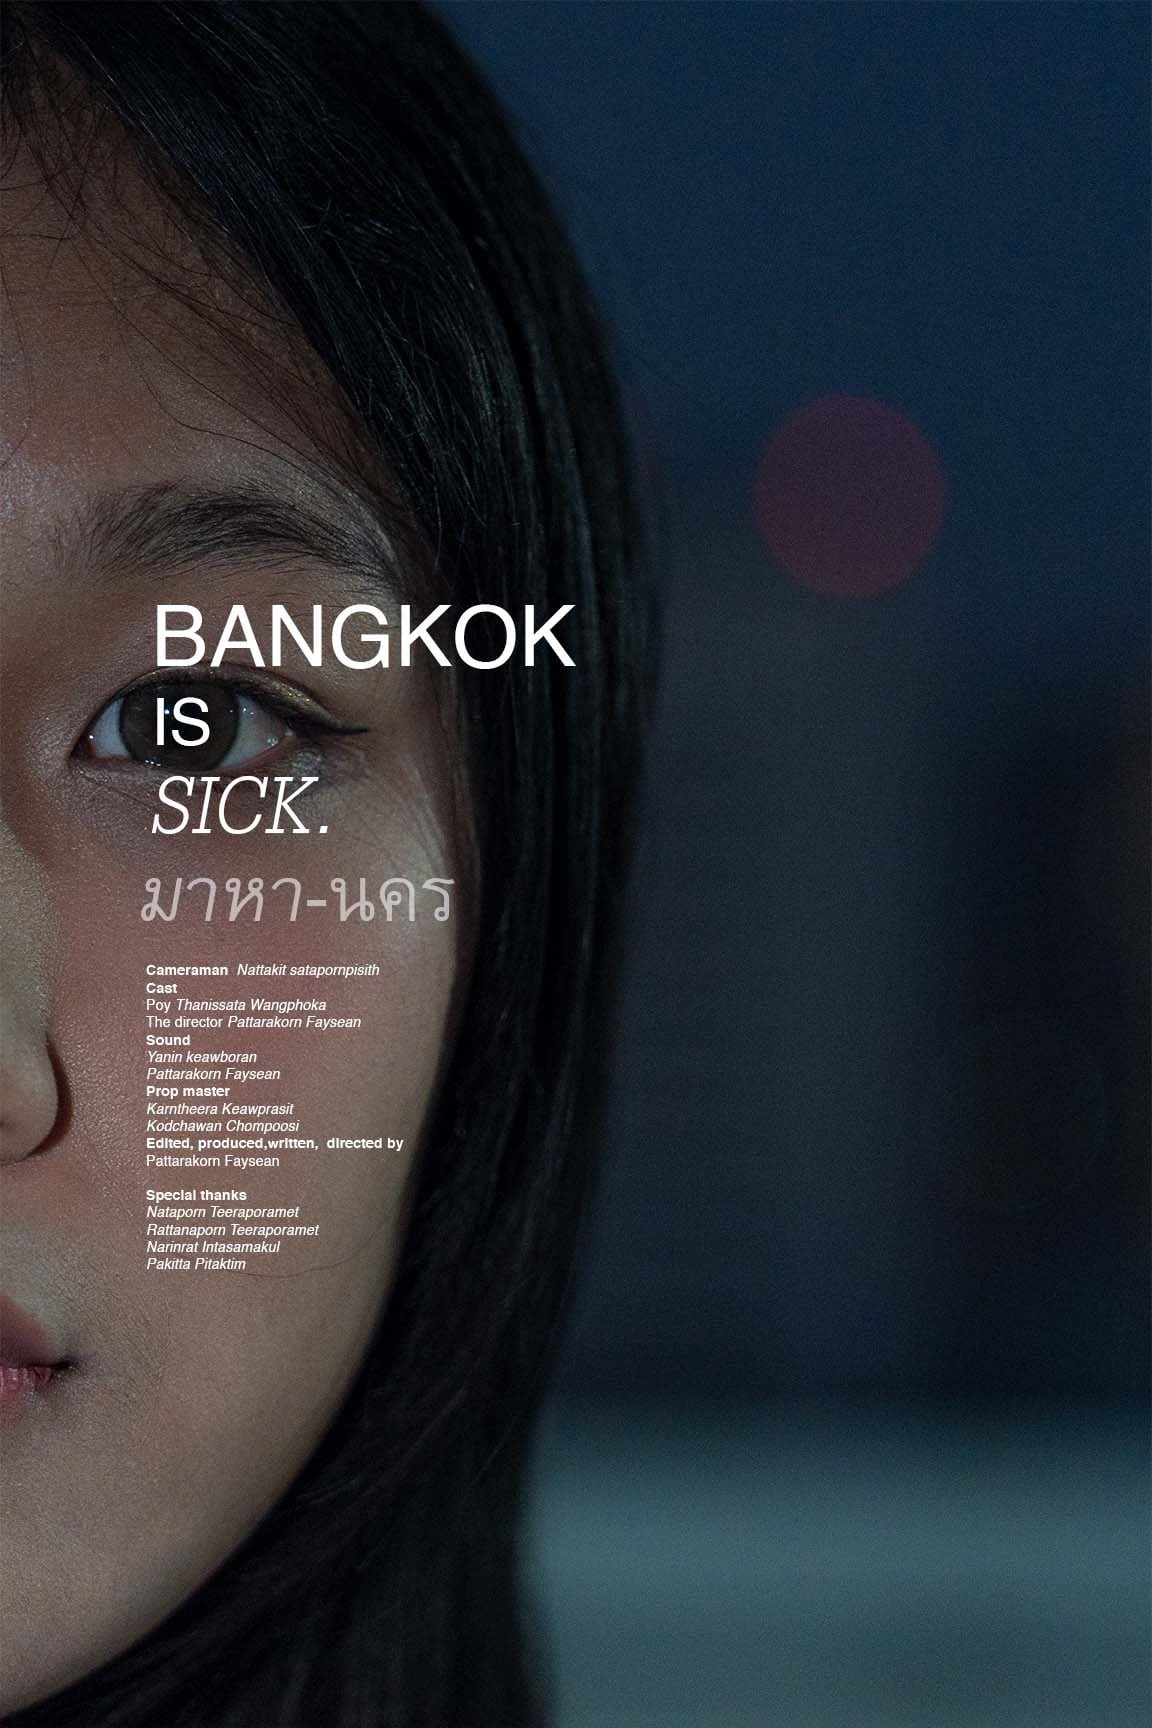 Bangkok is sick.